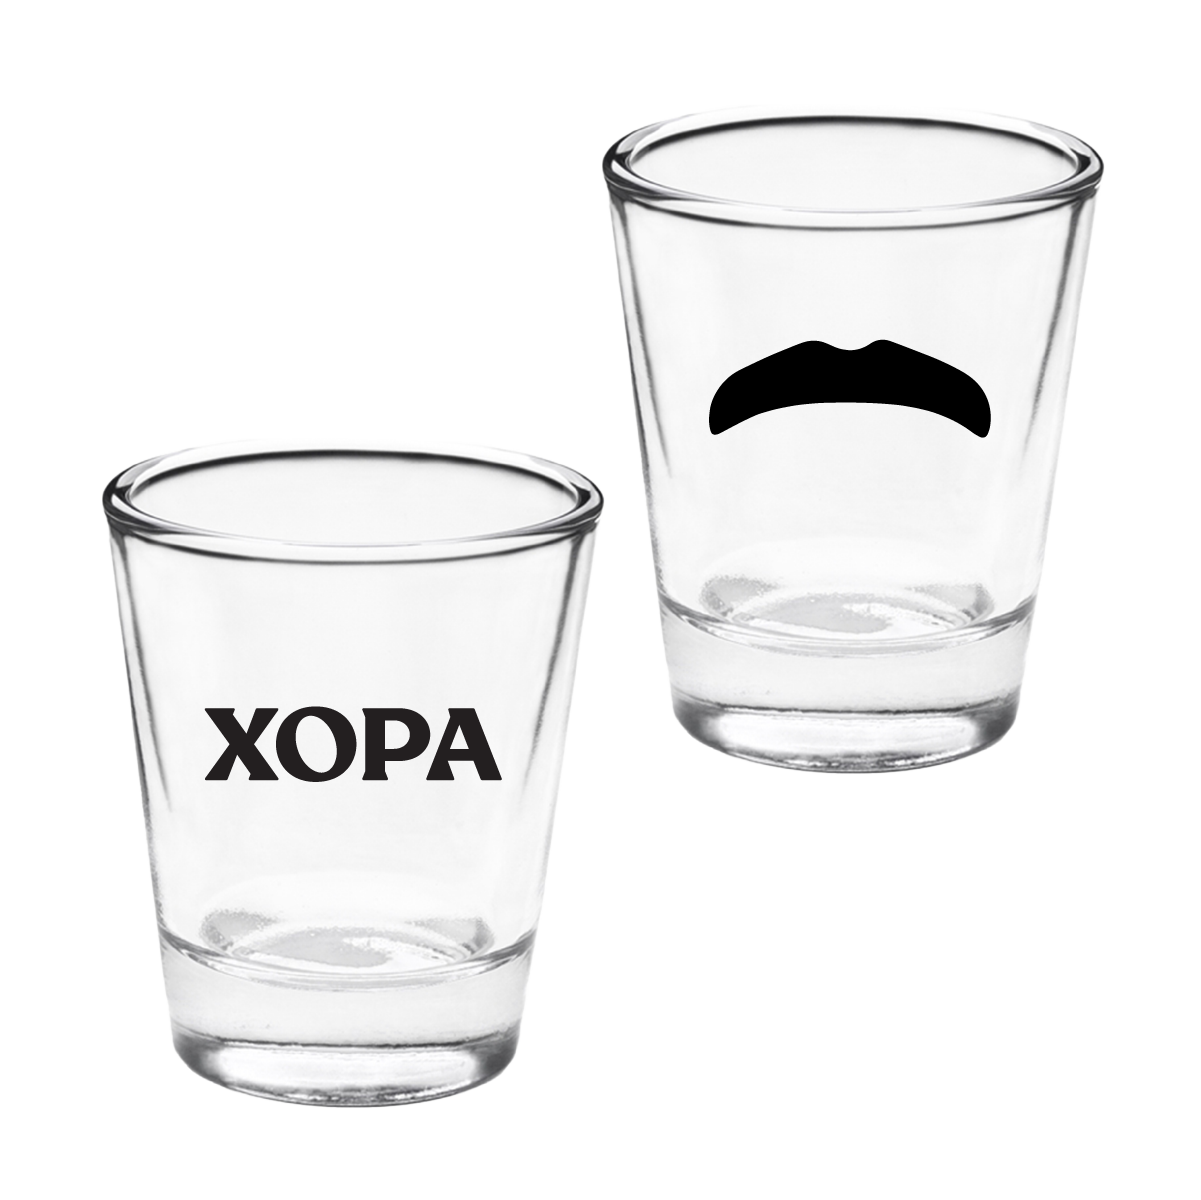 XOPA Shot Glass